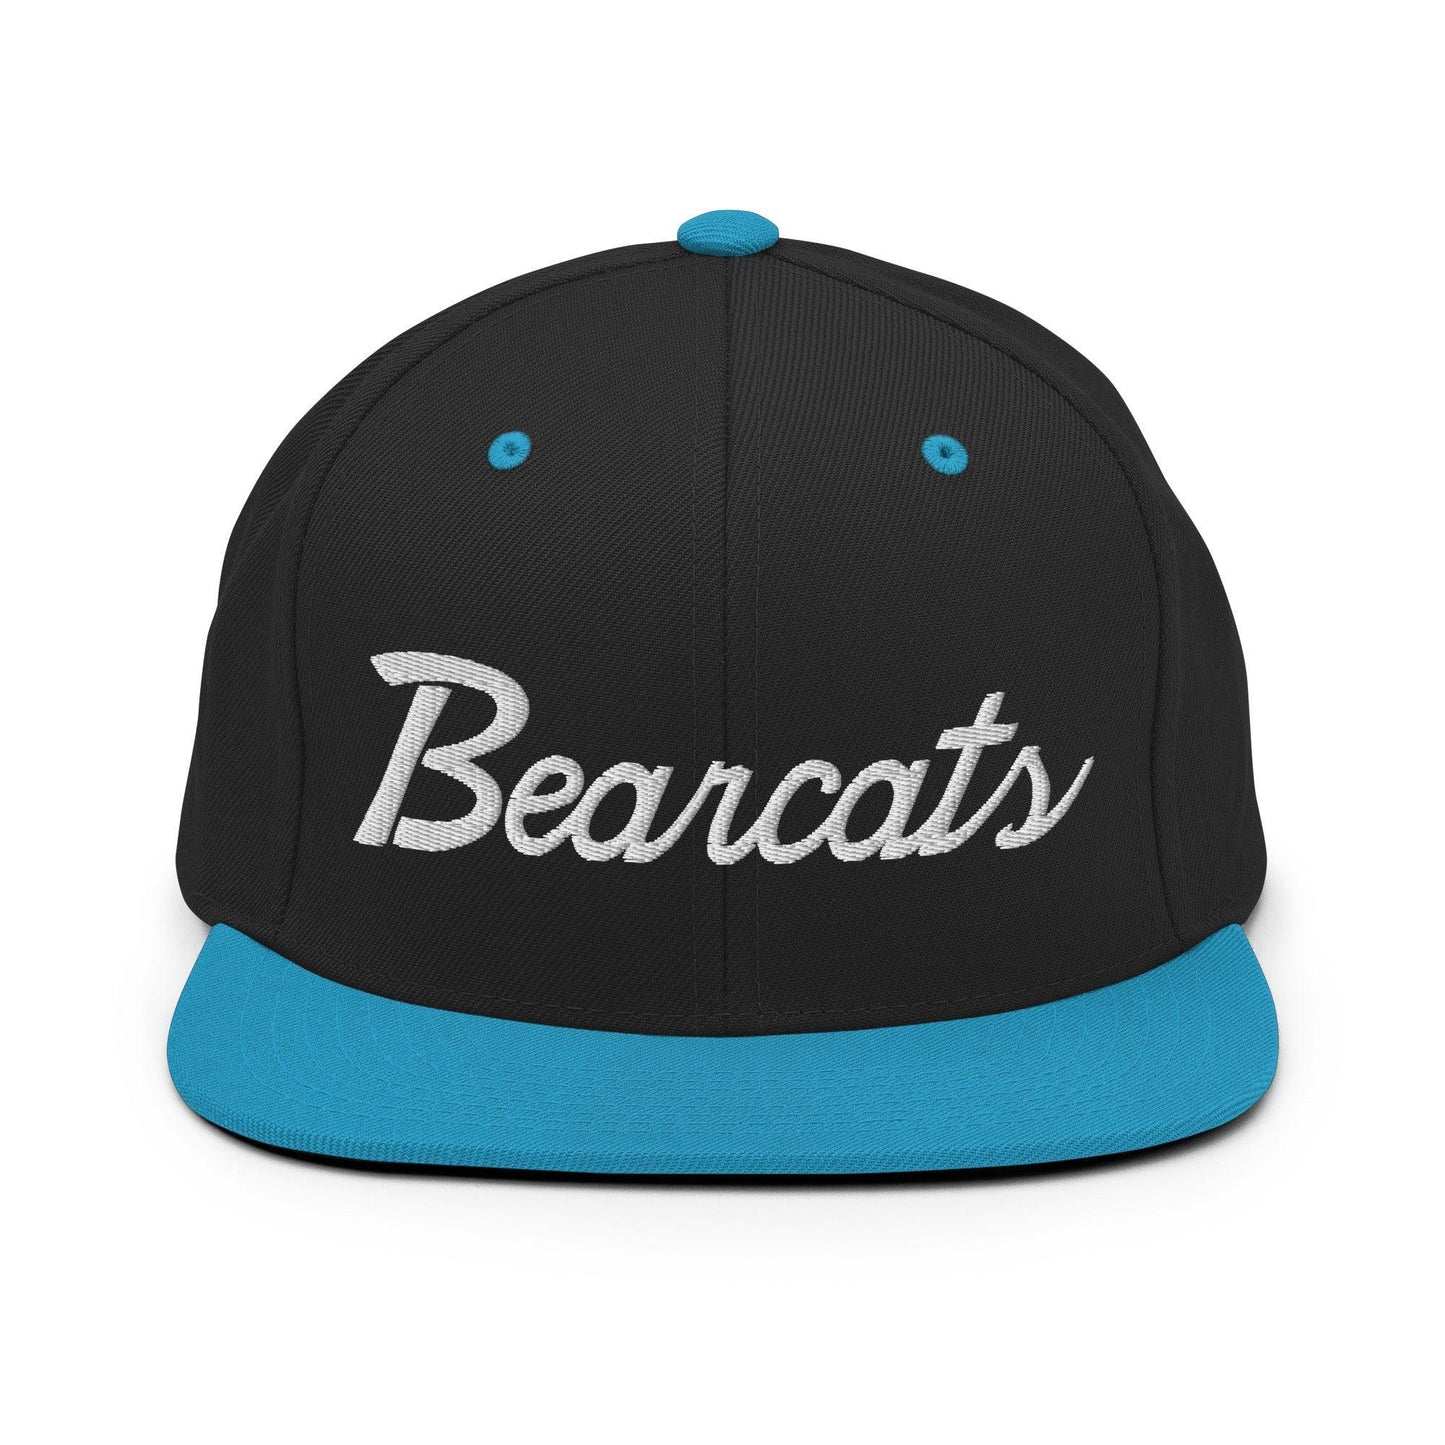 Bearcats School Mascot Script Snapback Hat Black/ Teal